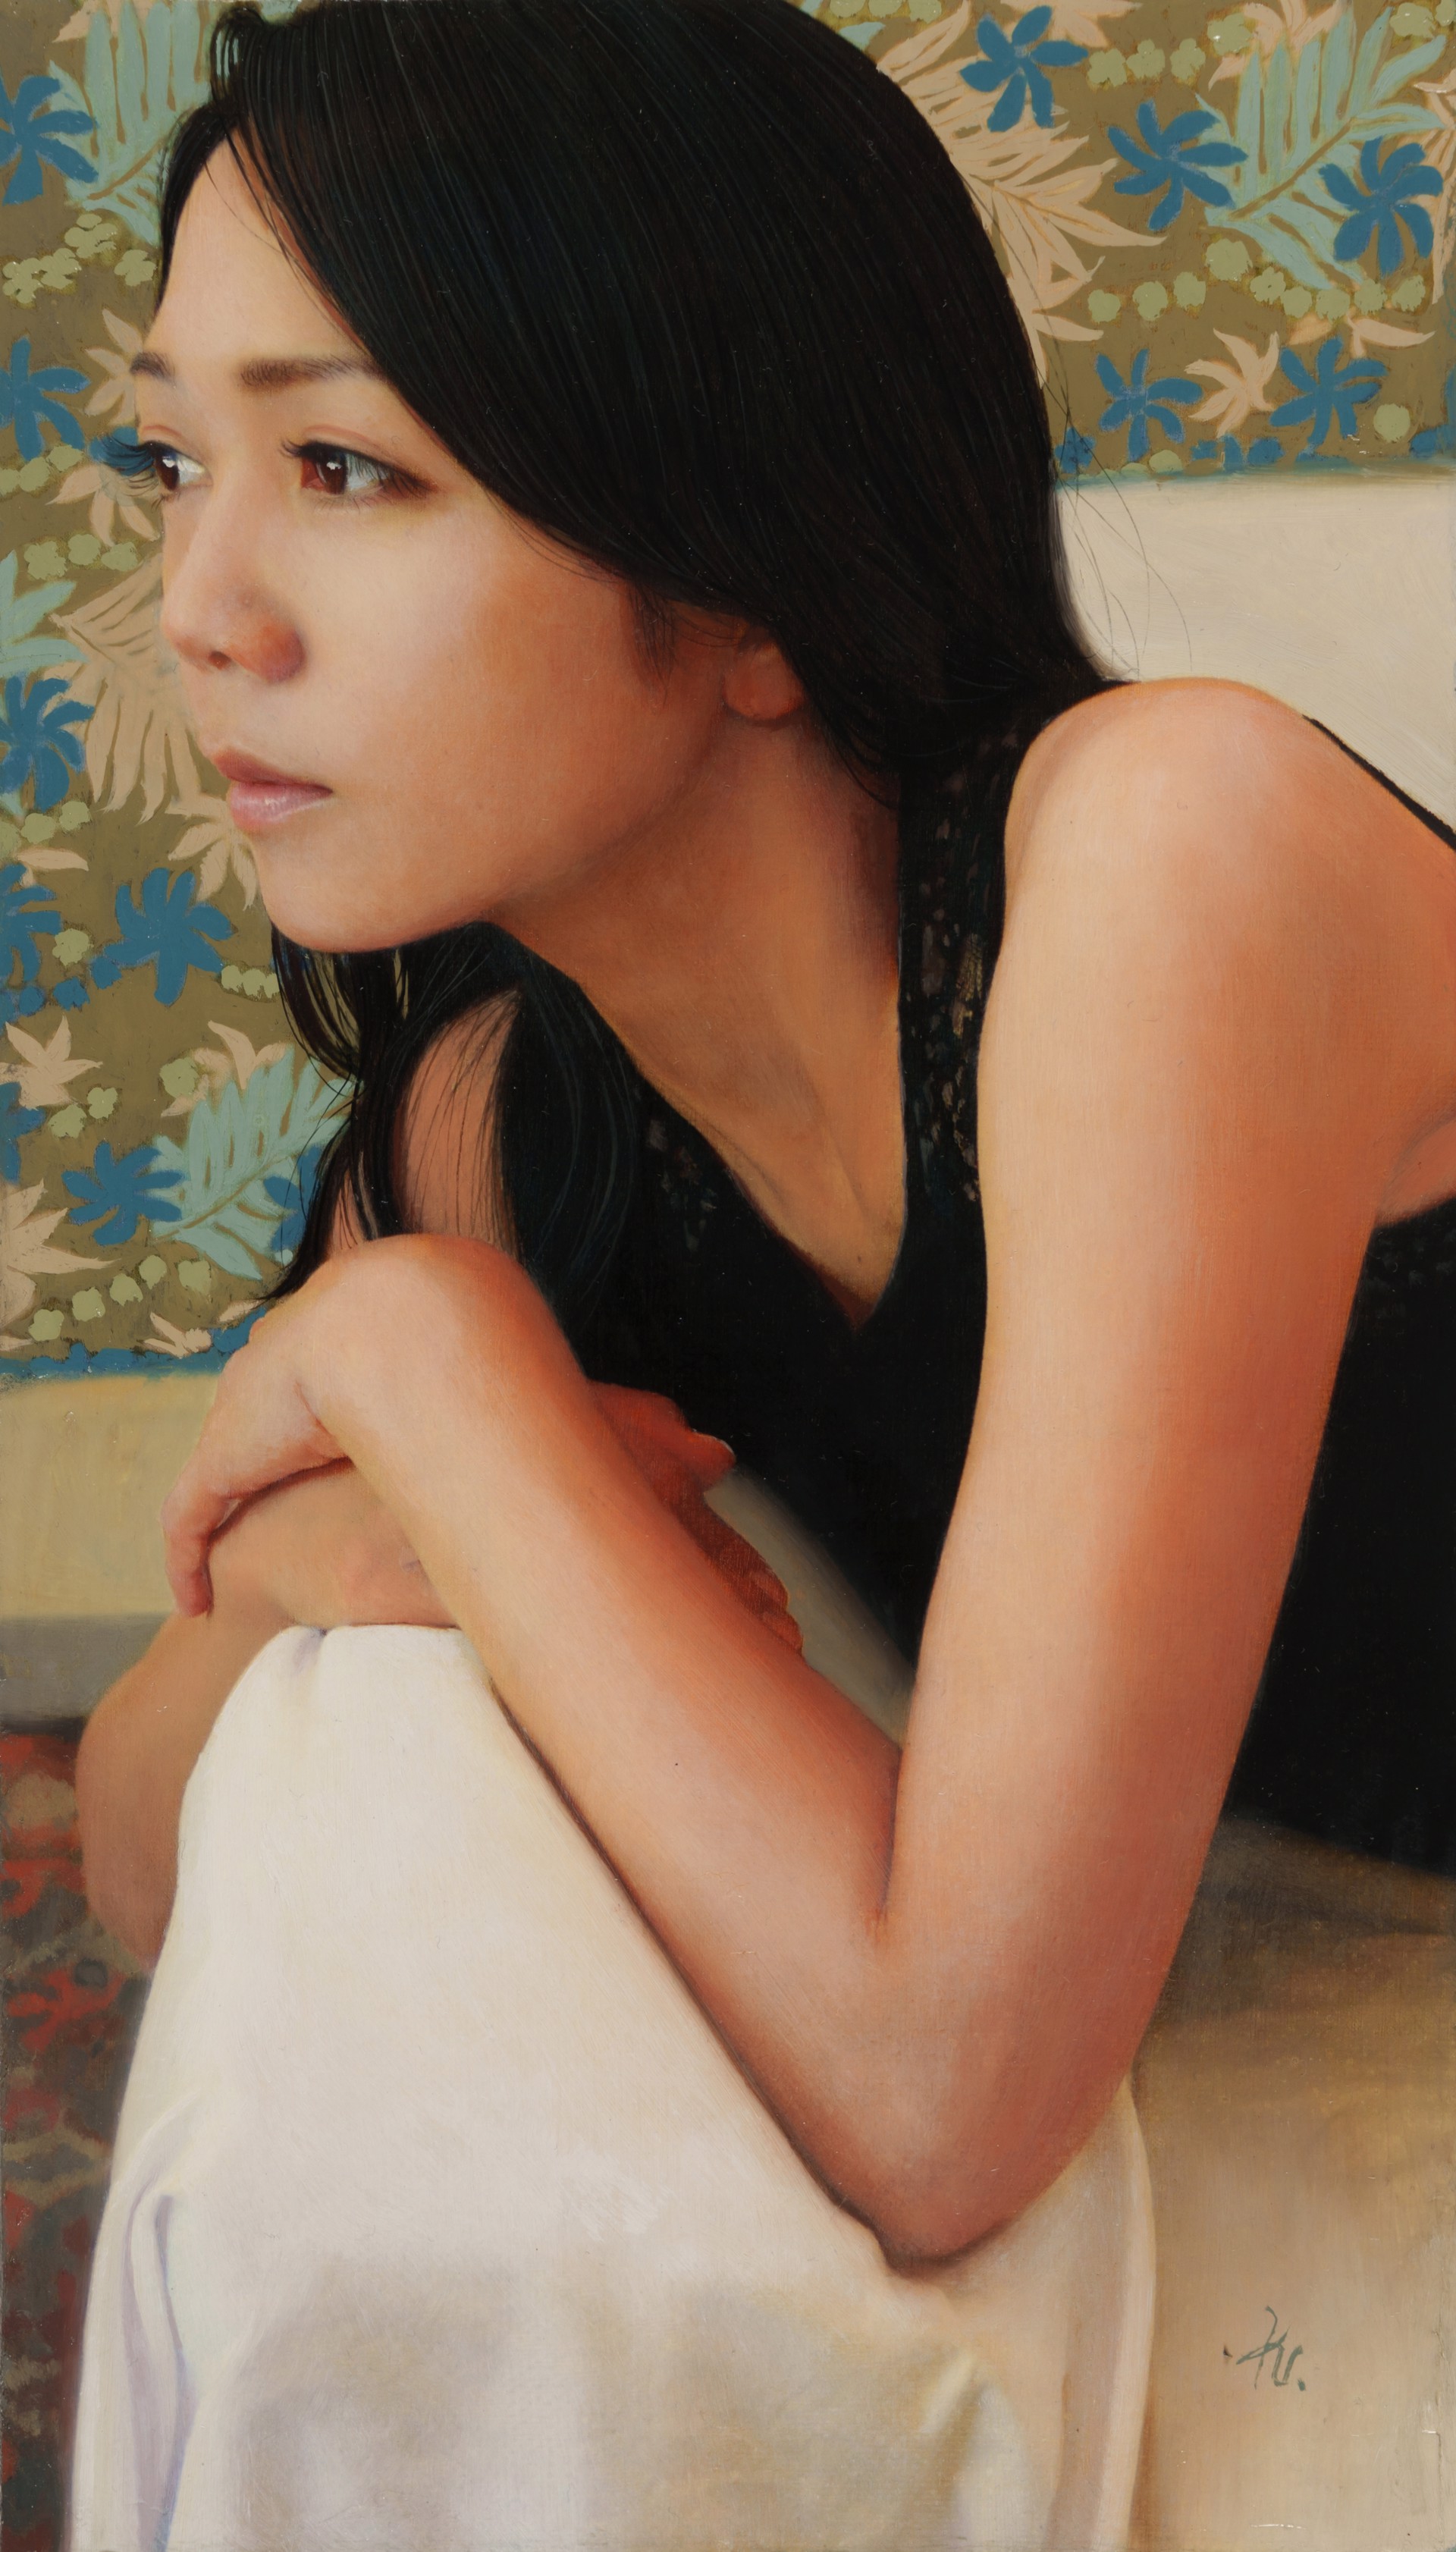 Everglow by Kazuya Ushioda